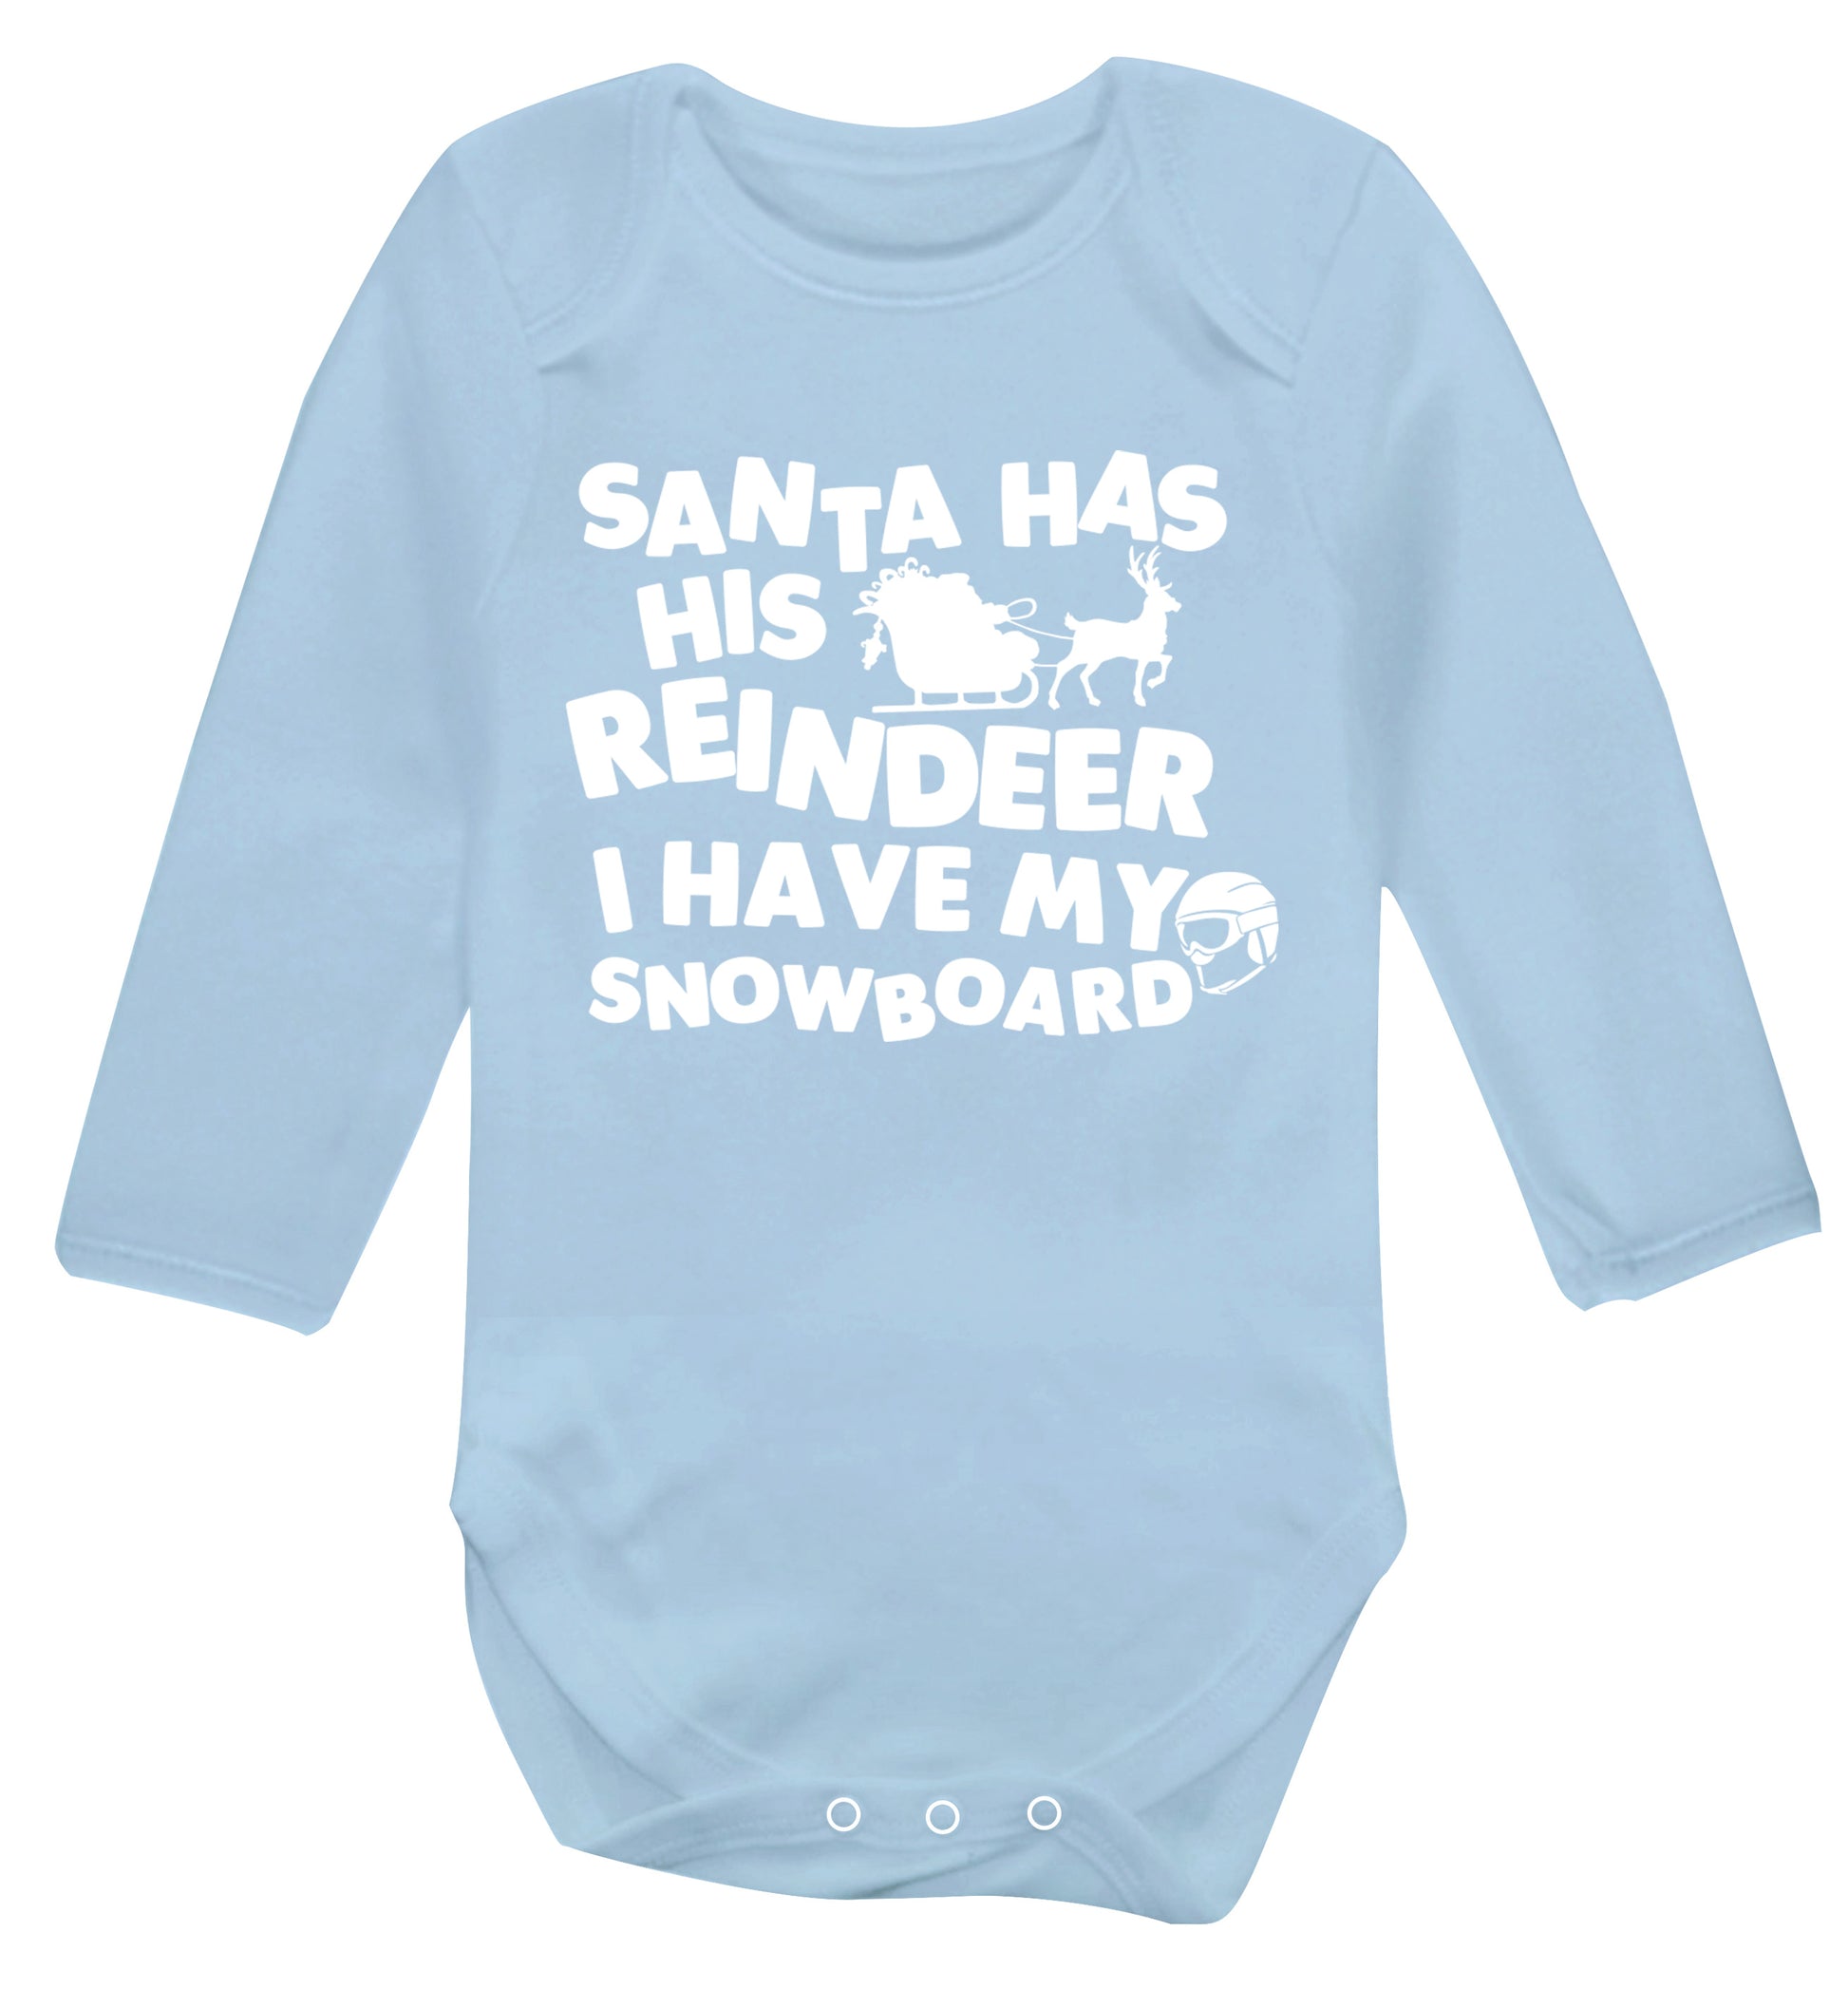 Santa has his reindeer I have my snowboard Baby Vest long sleeved pale blue 6-12 months